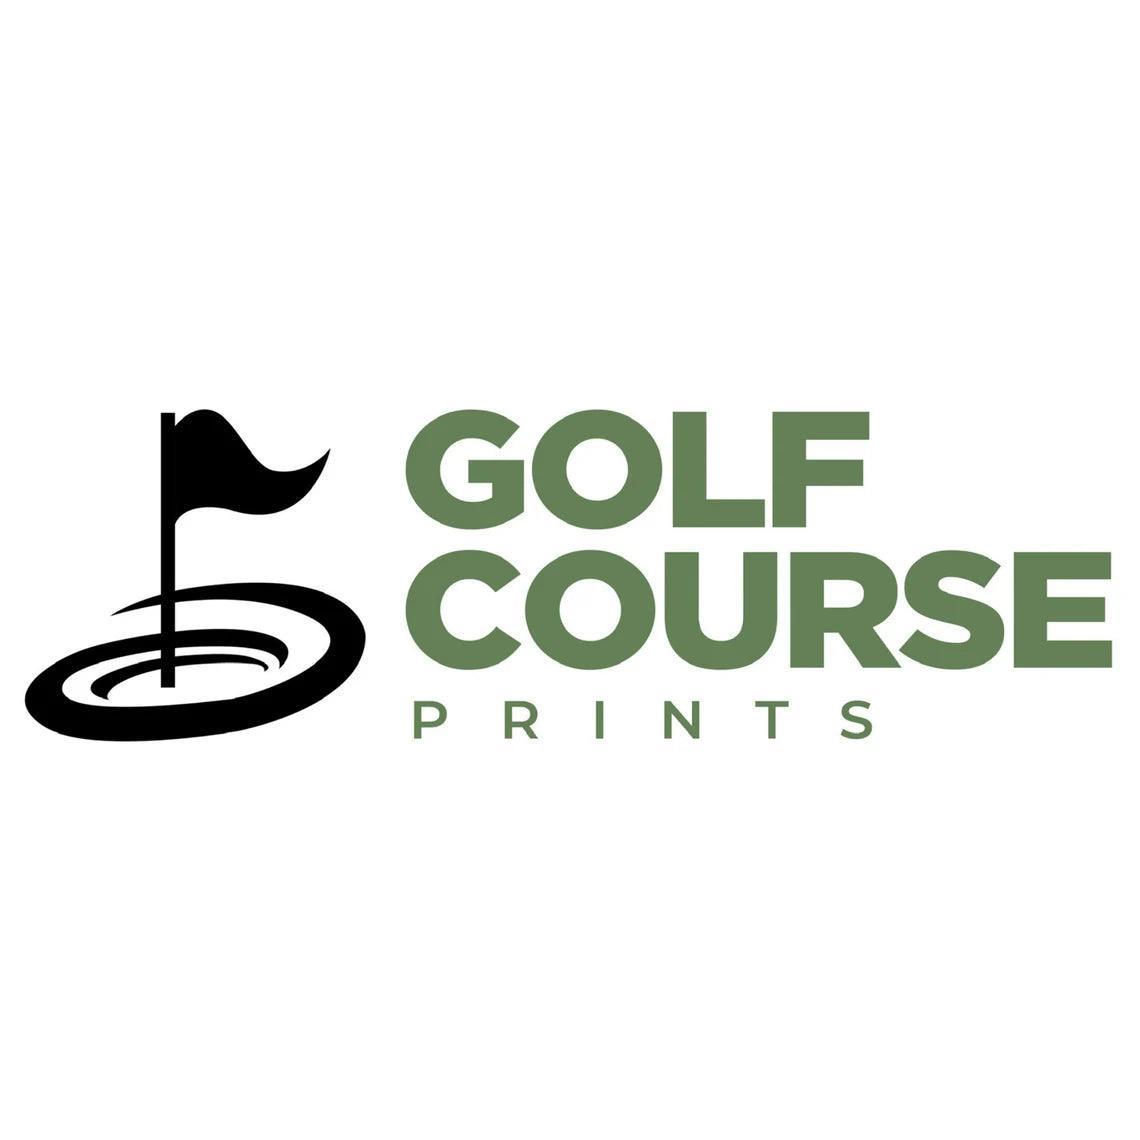 Pinehurst Resort #7, North Carolina - Printed Golf Courses